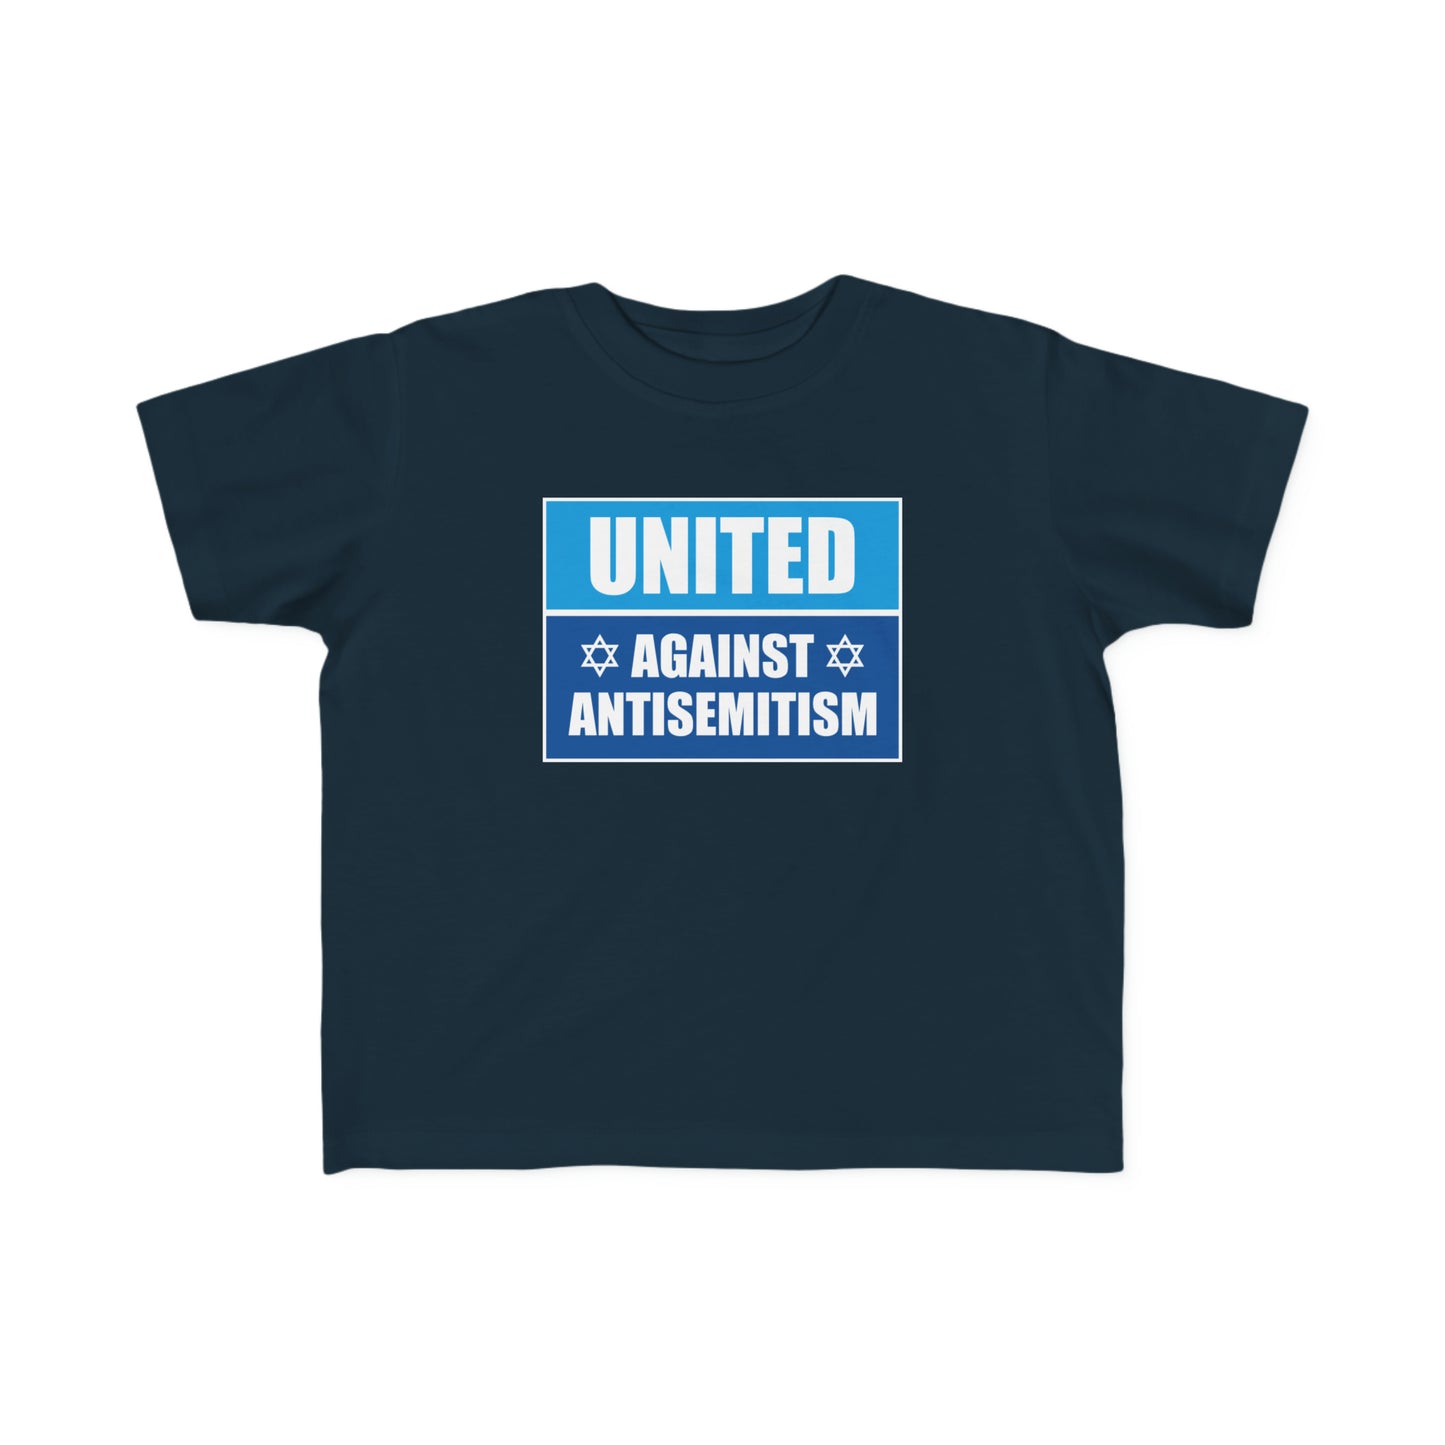 “United Against Antisemitism” Toddler's Tee